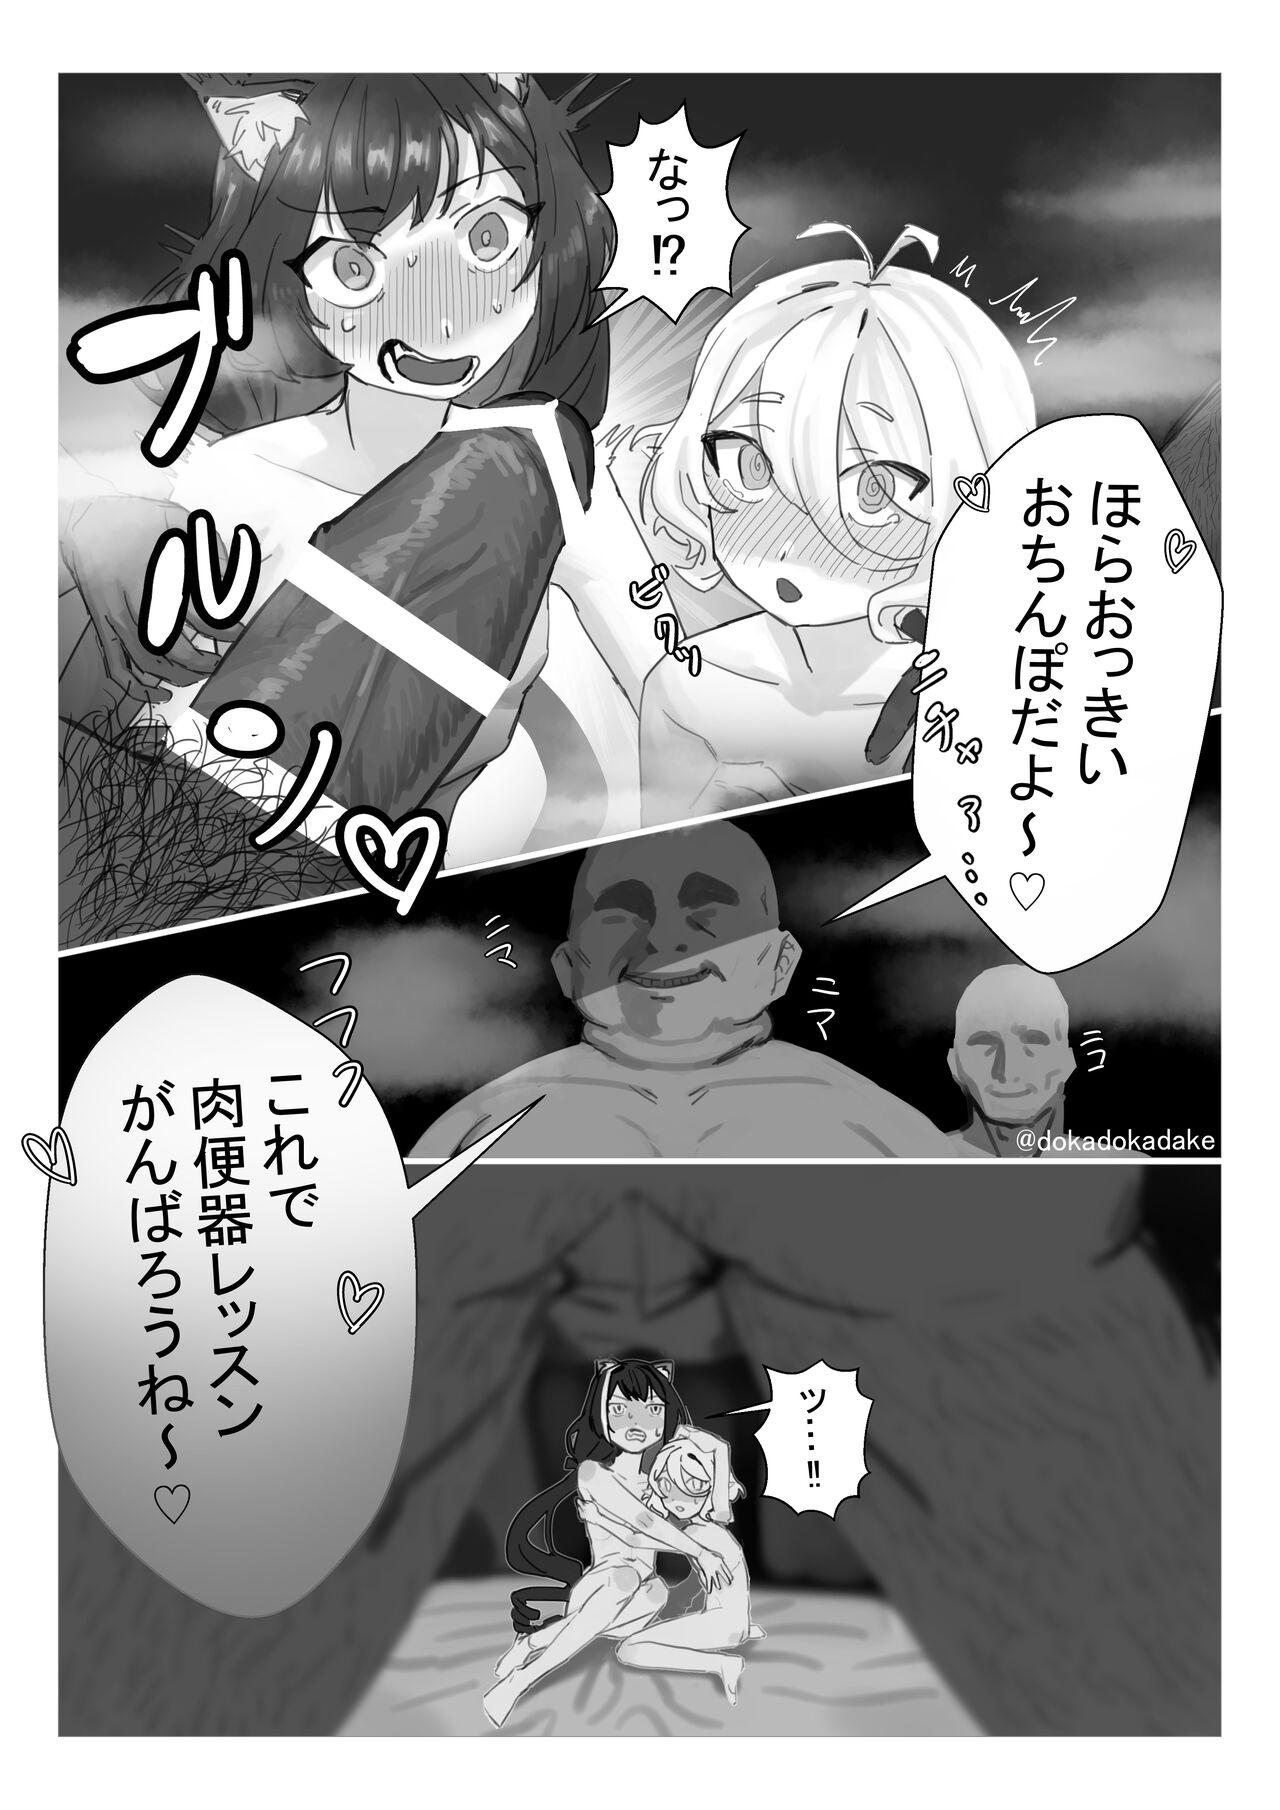 Work プリコネ輪姦NTR漫画 - Princess connect Chudai - Page 3